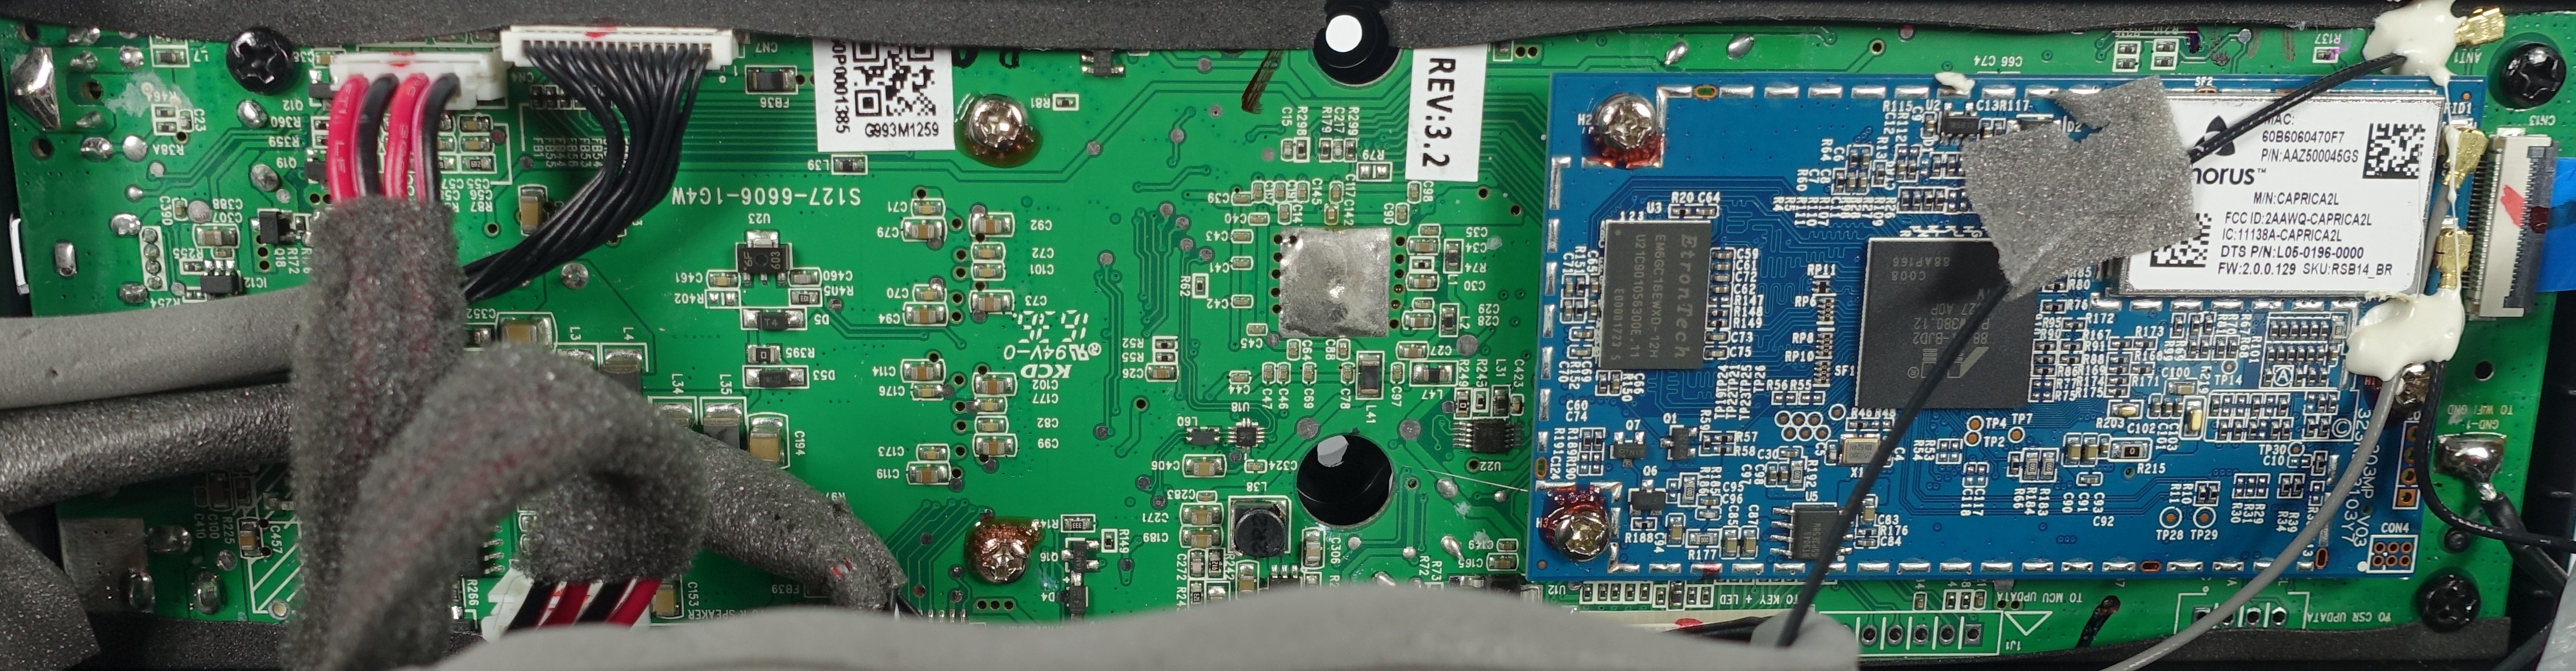 Amplifier board with Bluetooth module